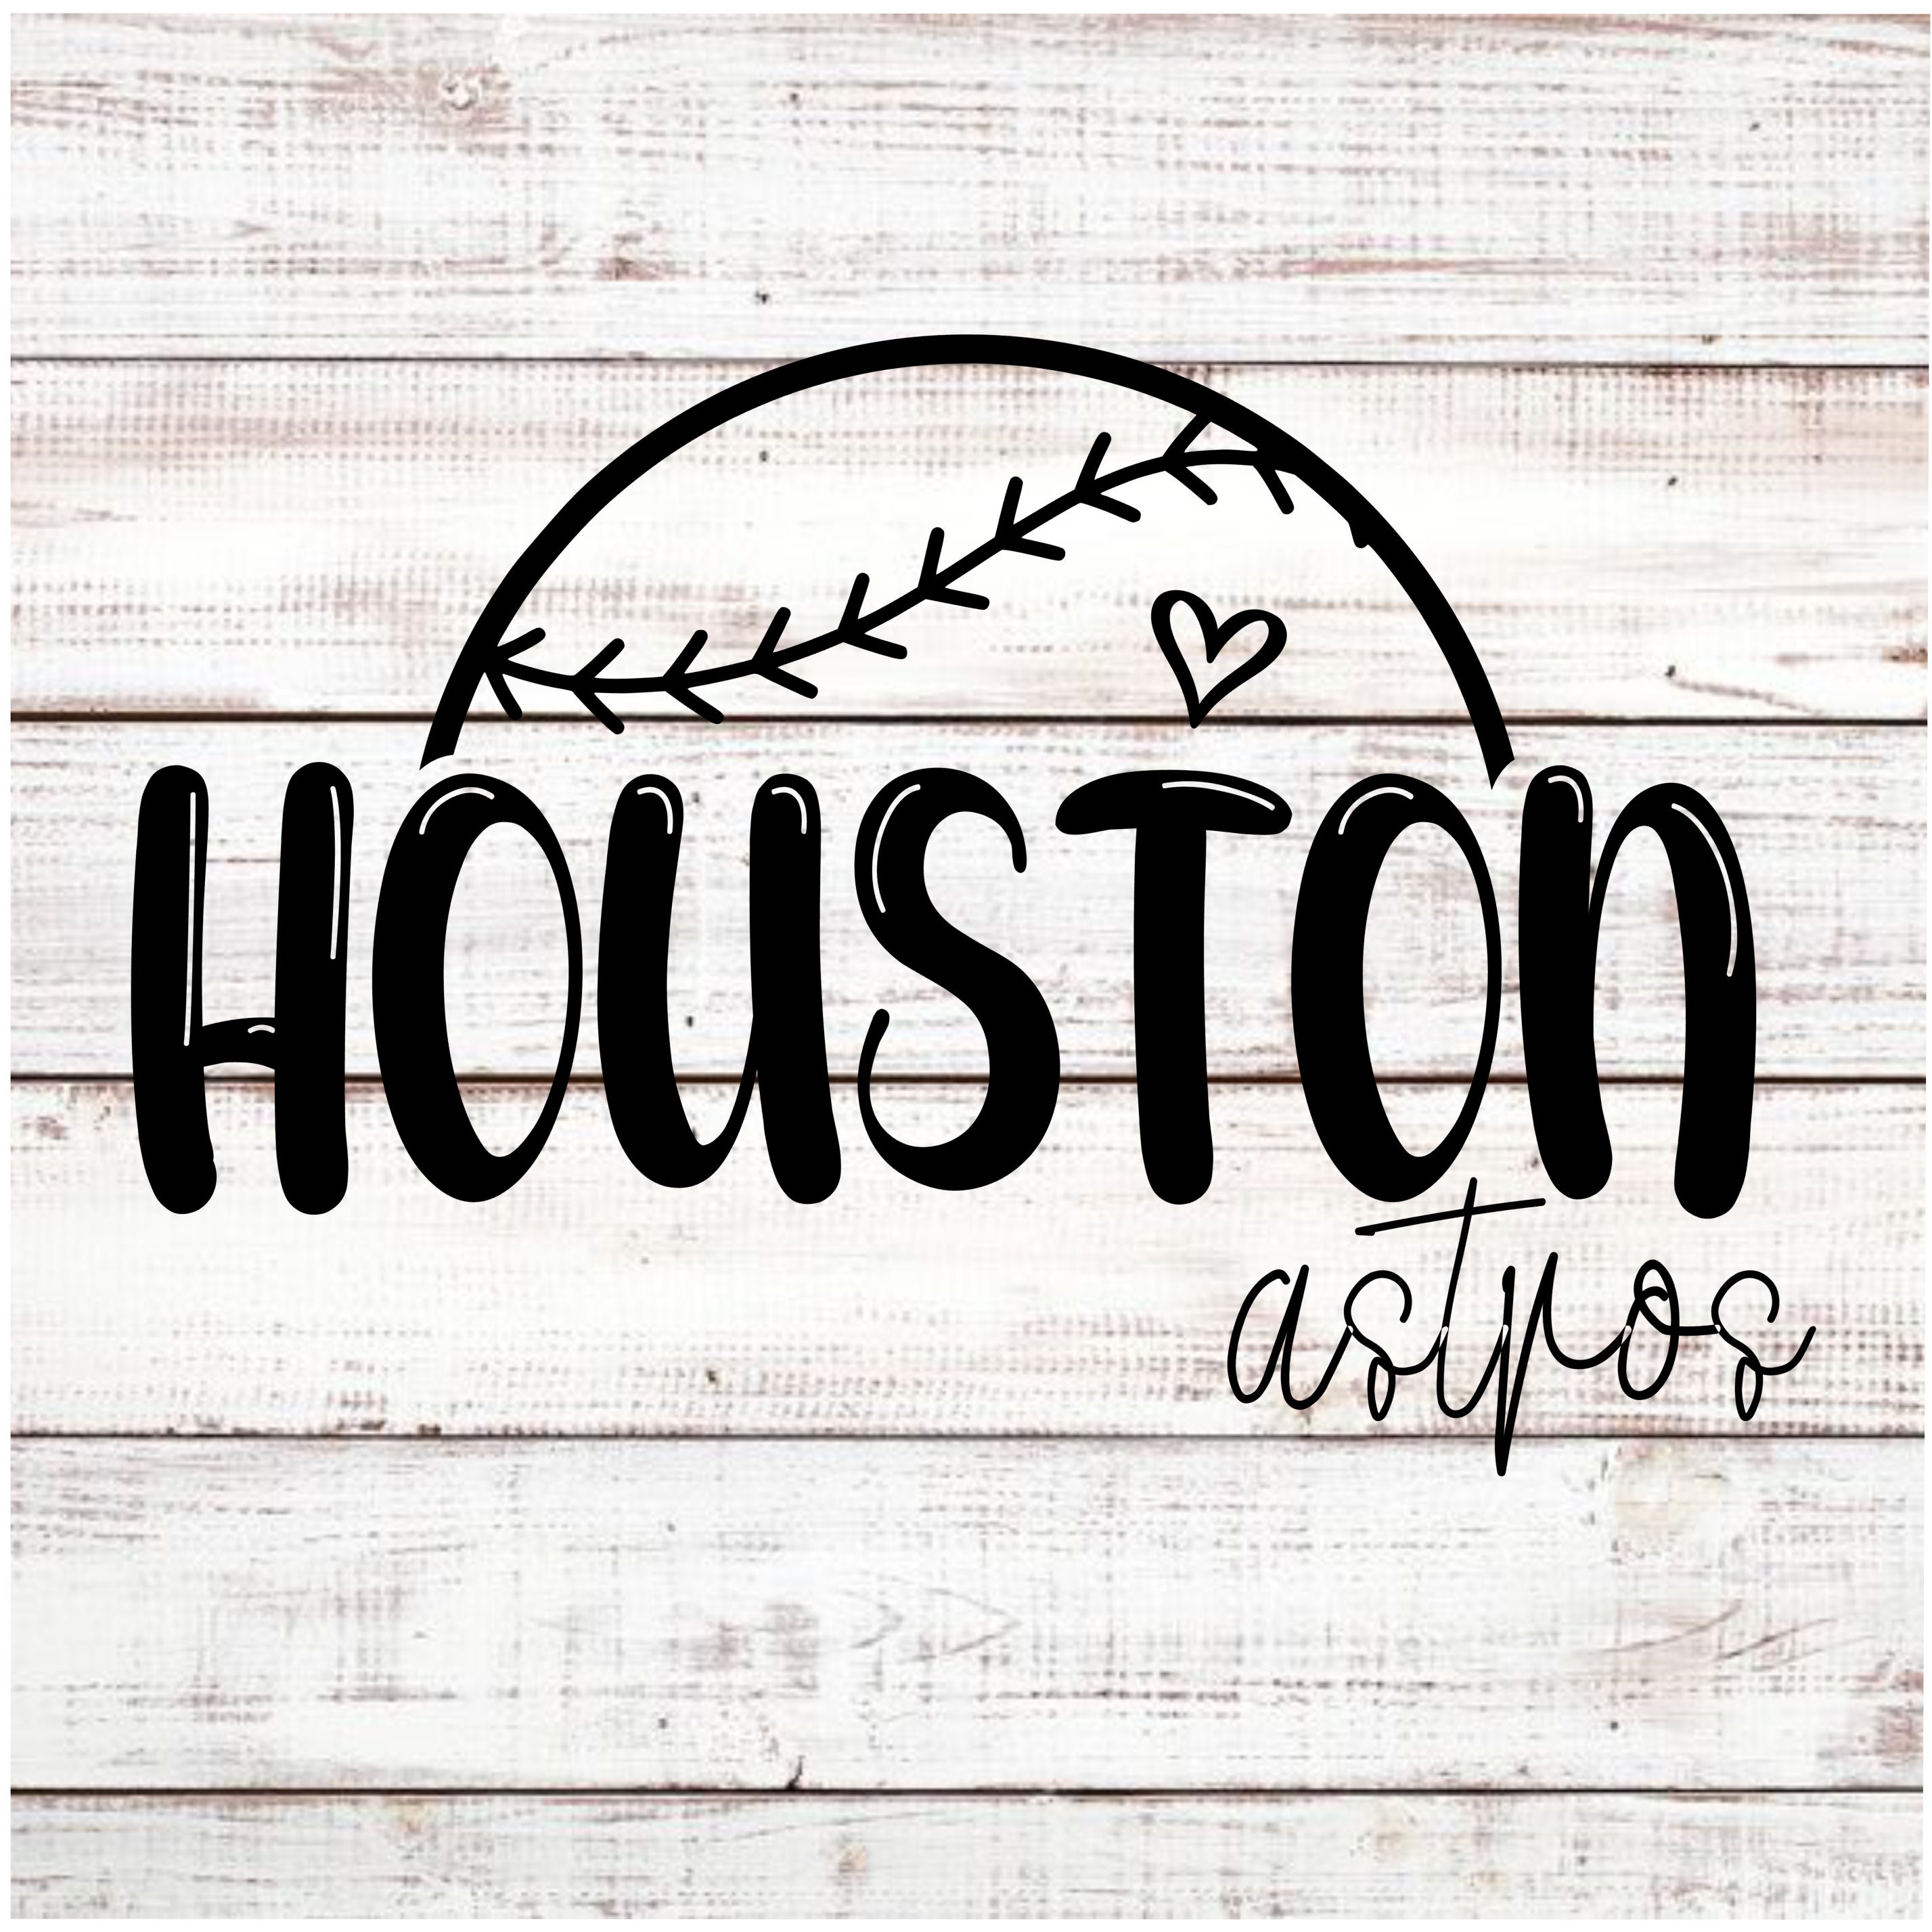 Digital SVG file on X: Houston Astros MLB SVG Cut Files Baseball Clipart  Bundle -  - #astros #astrologia #horoscopo #mlb  #signos #houston #baseball #zodiaco #houstonastros #o #amor #astrology  #tarot #libra #a #